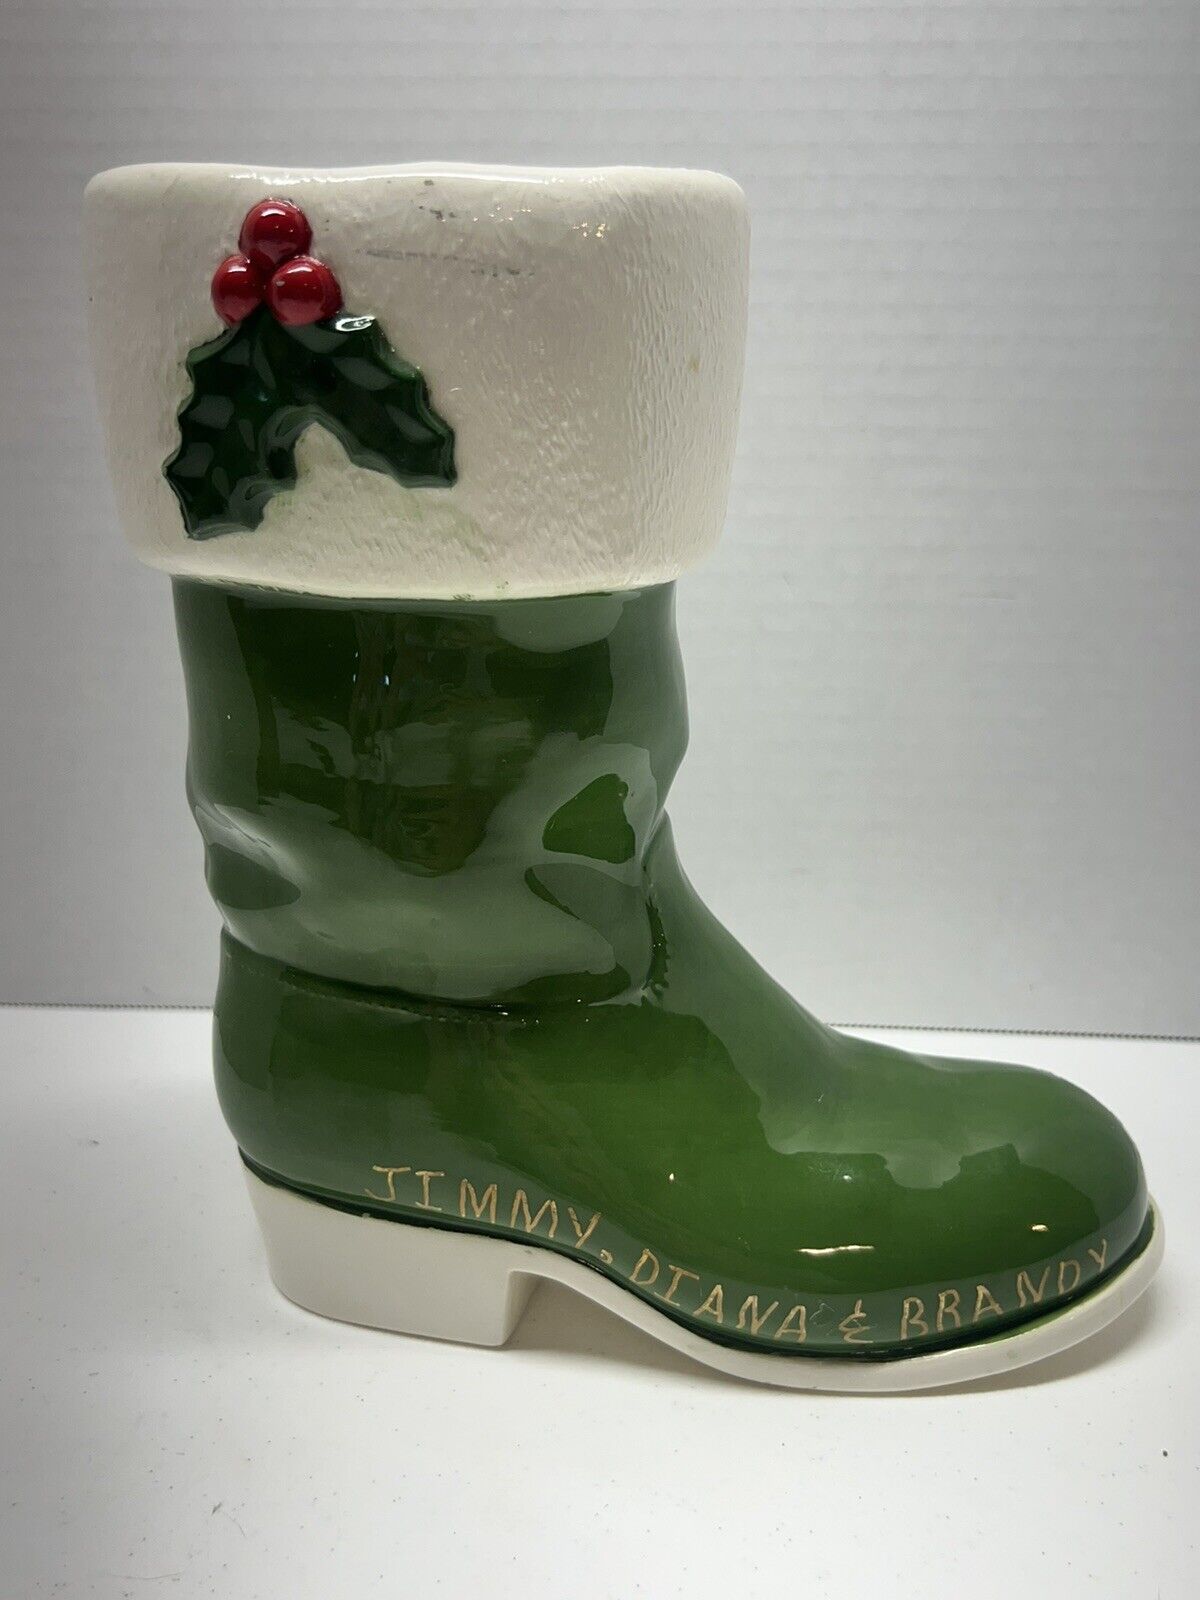 Vintage Santa's Boot Christmas Vase Planter 9